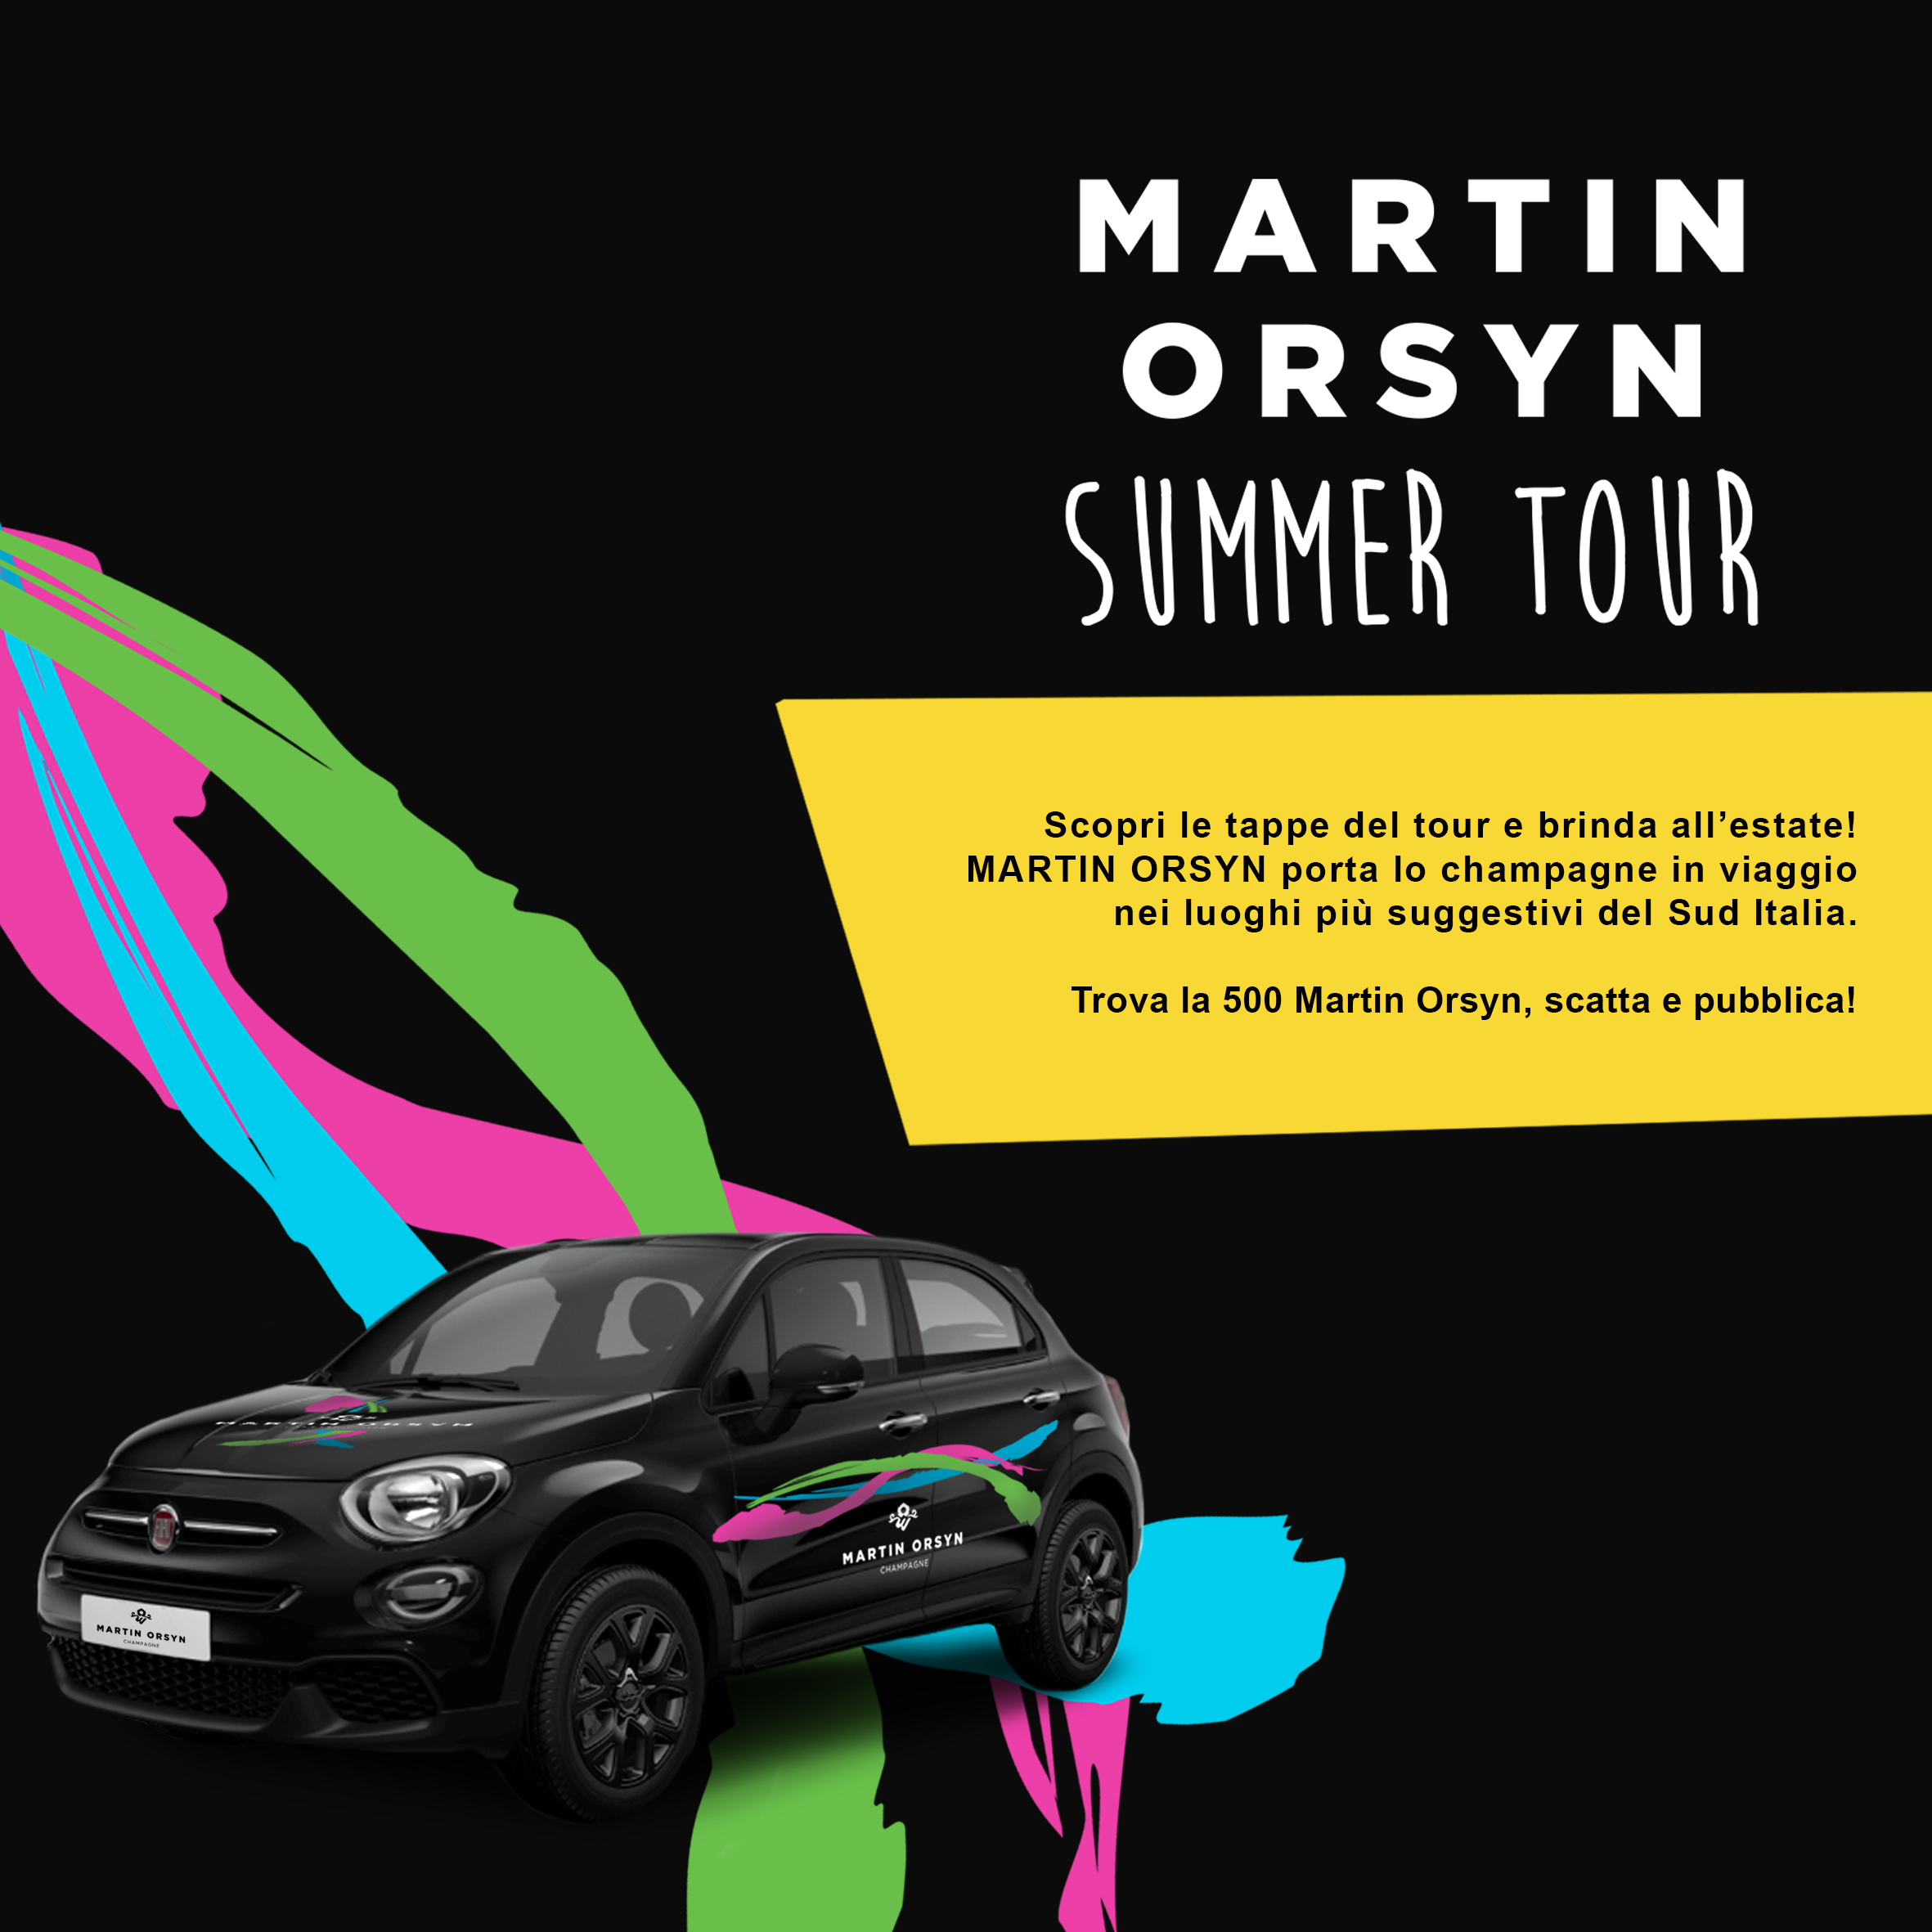 martin orsyn summer tour adv